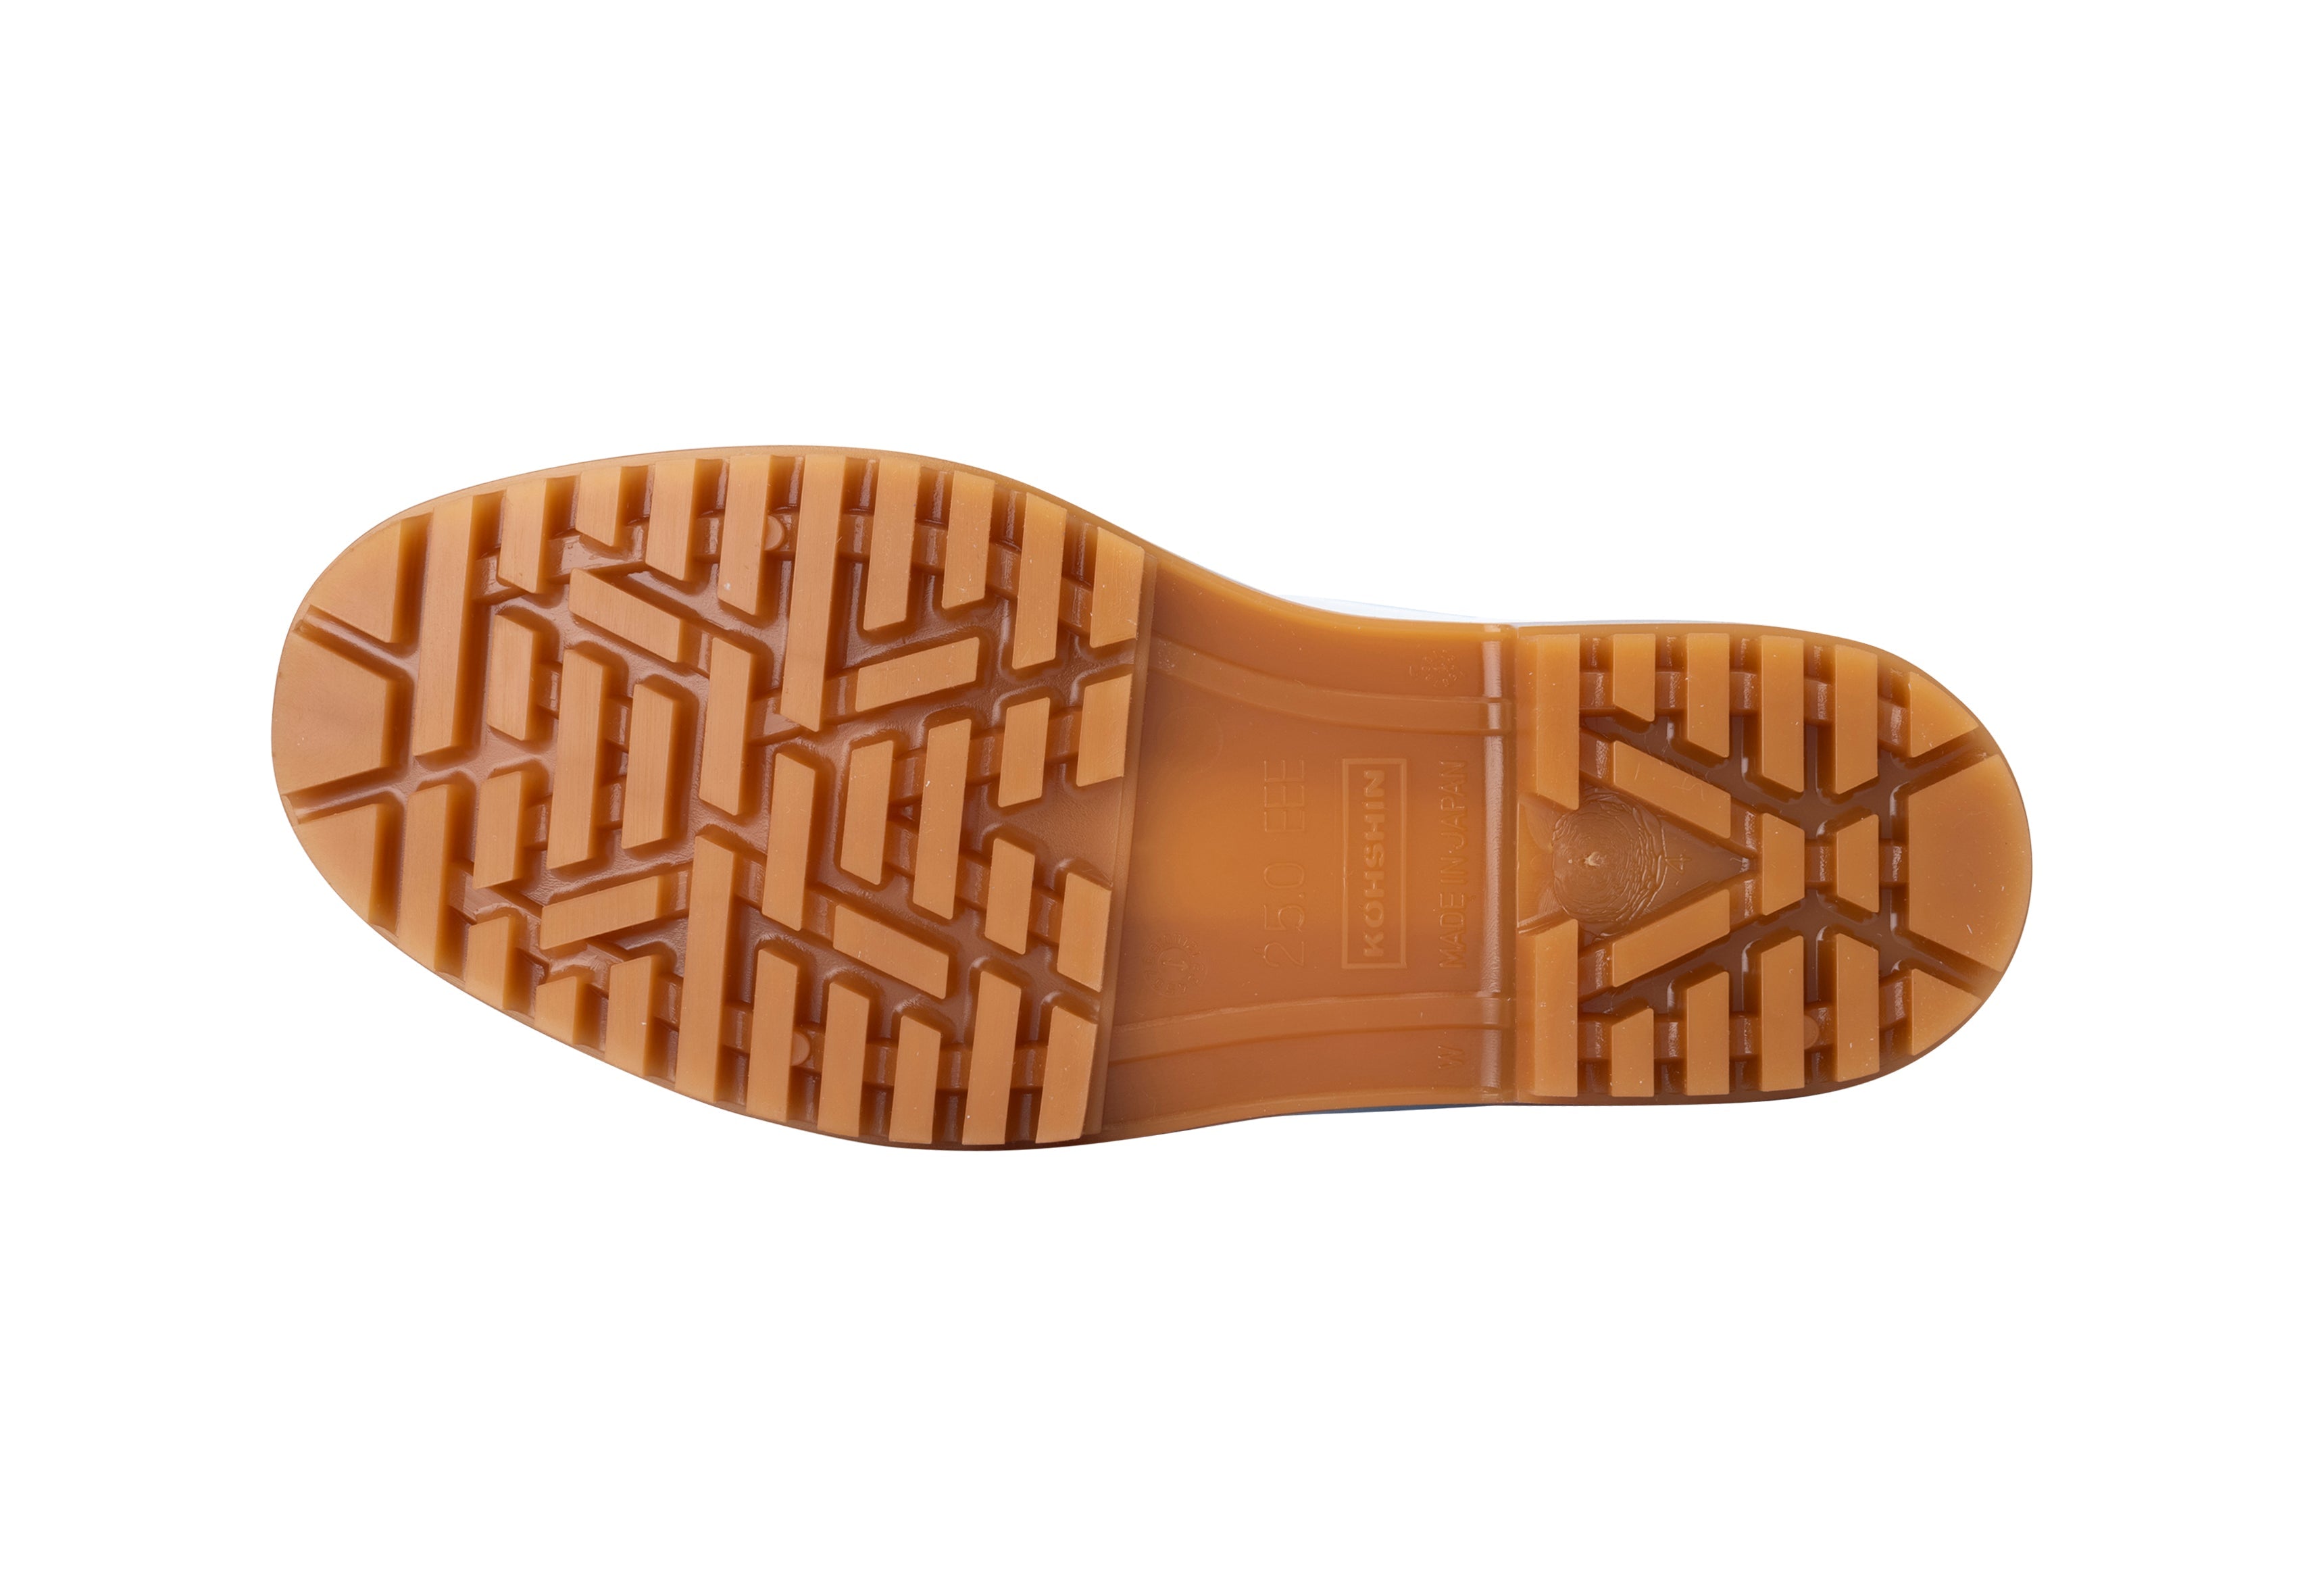 ZONA G5 Labor Boots (Top Sales in Japan)-ZONA (KOHSHIN)-BK-JP/TW Size-1: 225-偉豐鞋 WELL SHOE HK-Well Shoe-偉豐鞋-偉豐網-荃灣鞋店-Functional shoes-Hong Kong Tsuen Wan Shoe Store-Tai Wan Shoe-Japan Shoe-高品質功能鞋-台灣進口鞋-日本進口鞋-High-quality shoes-鞋類配件-荃灣進口鞋-香港鞋店-優質鞋類產品-水靴-帆布鞋-廚師鞋-香港鞋品牌-Hong Kong Shoes brand-長者鞋-Hong Kong Rain Boots-Kitchen shoes-Cruthes-Slipper-Well Shoe Hong Kong-Anello-Arriba-休閒鞋-舒適鞋-健康鞋-皮鞋-Healthy shoes-Leather shoes-Hiking shoes